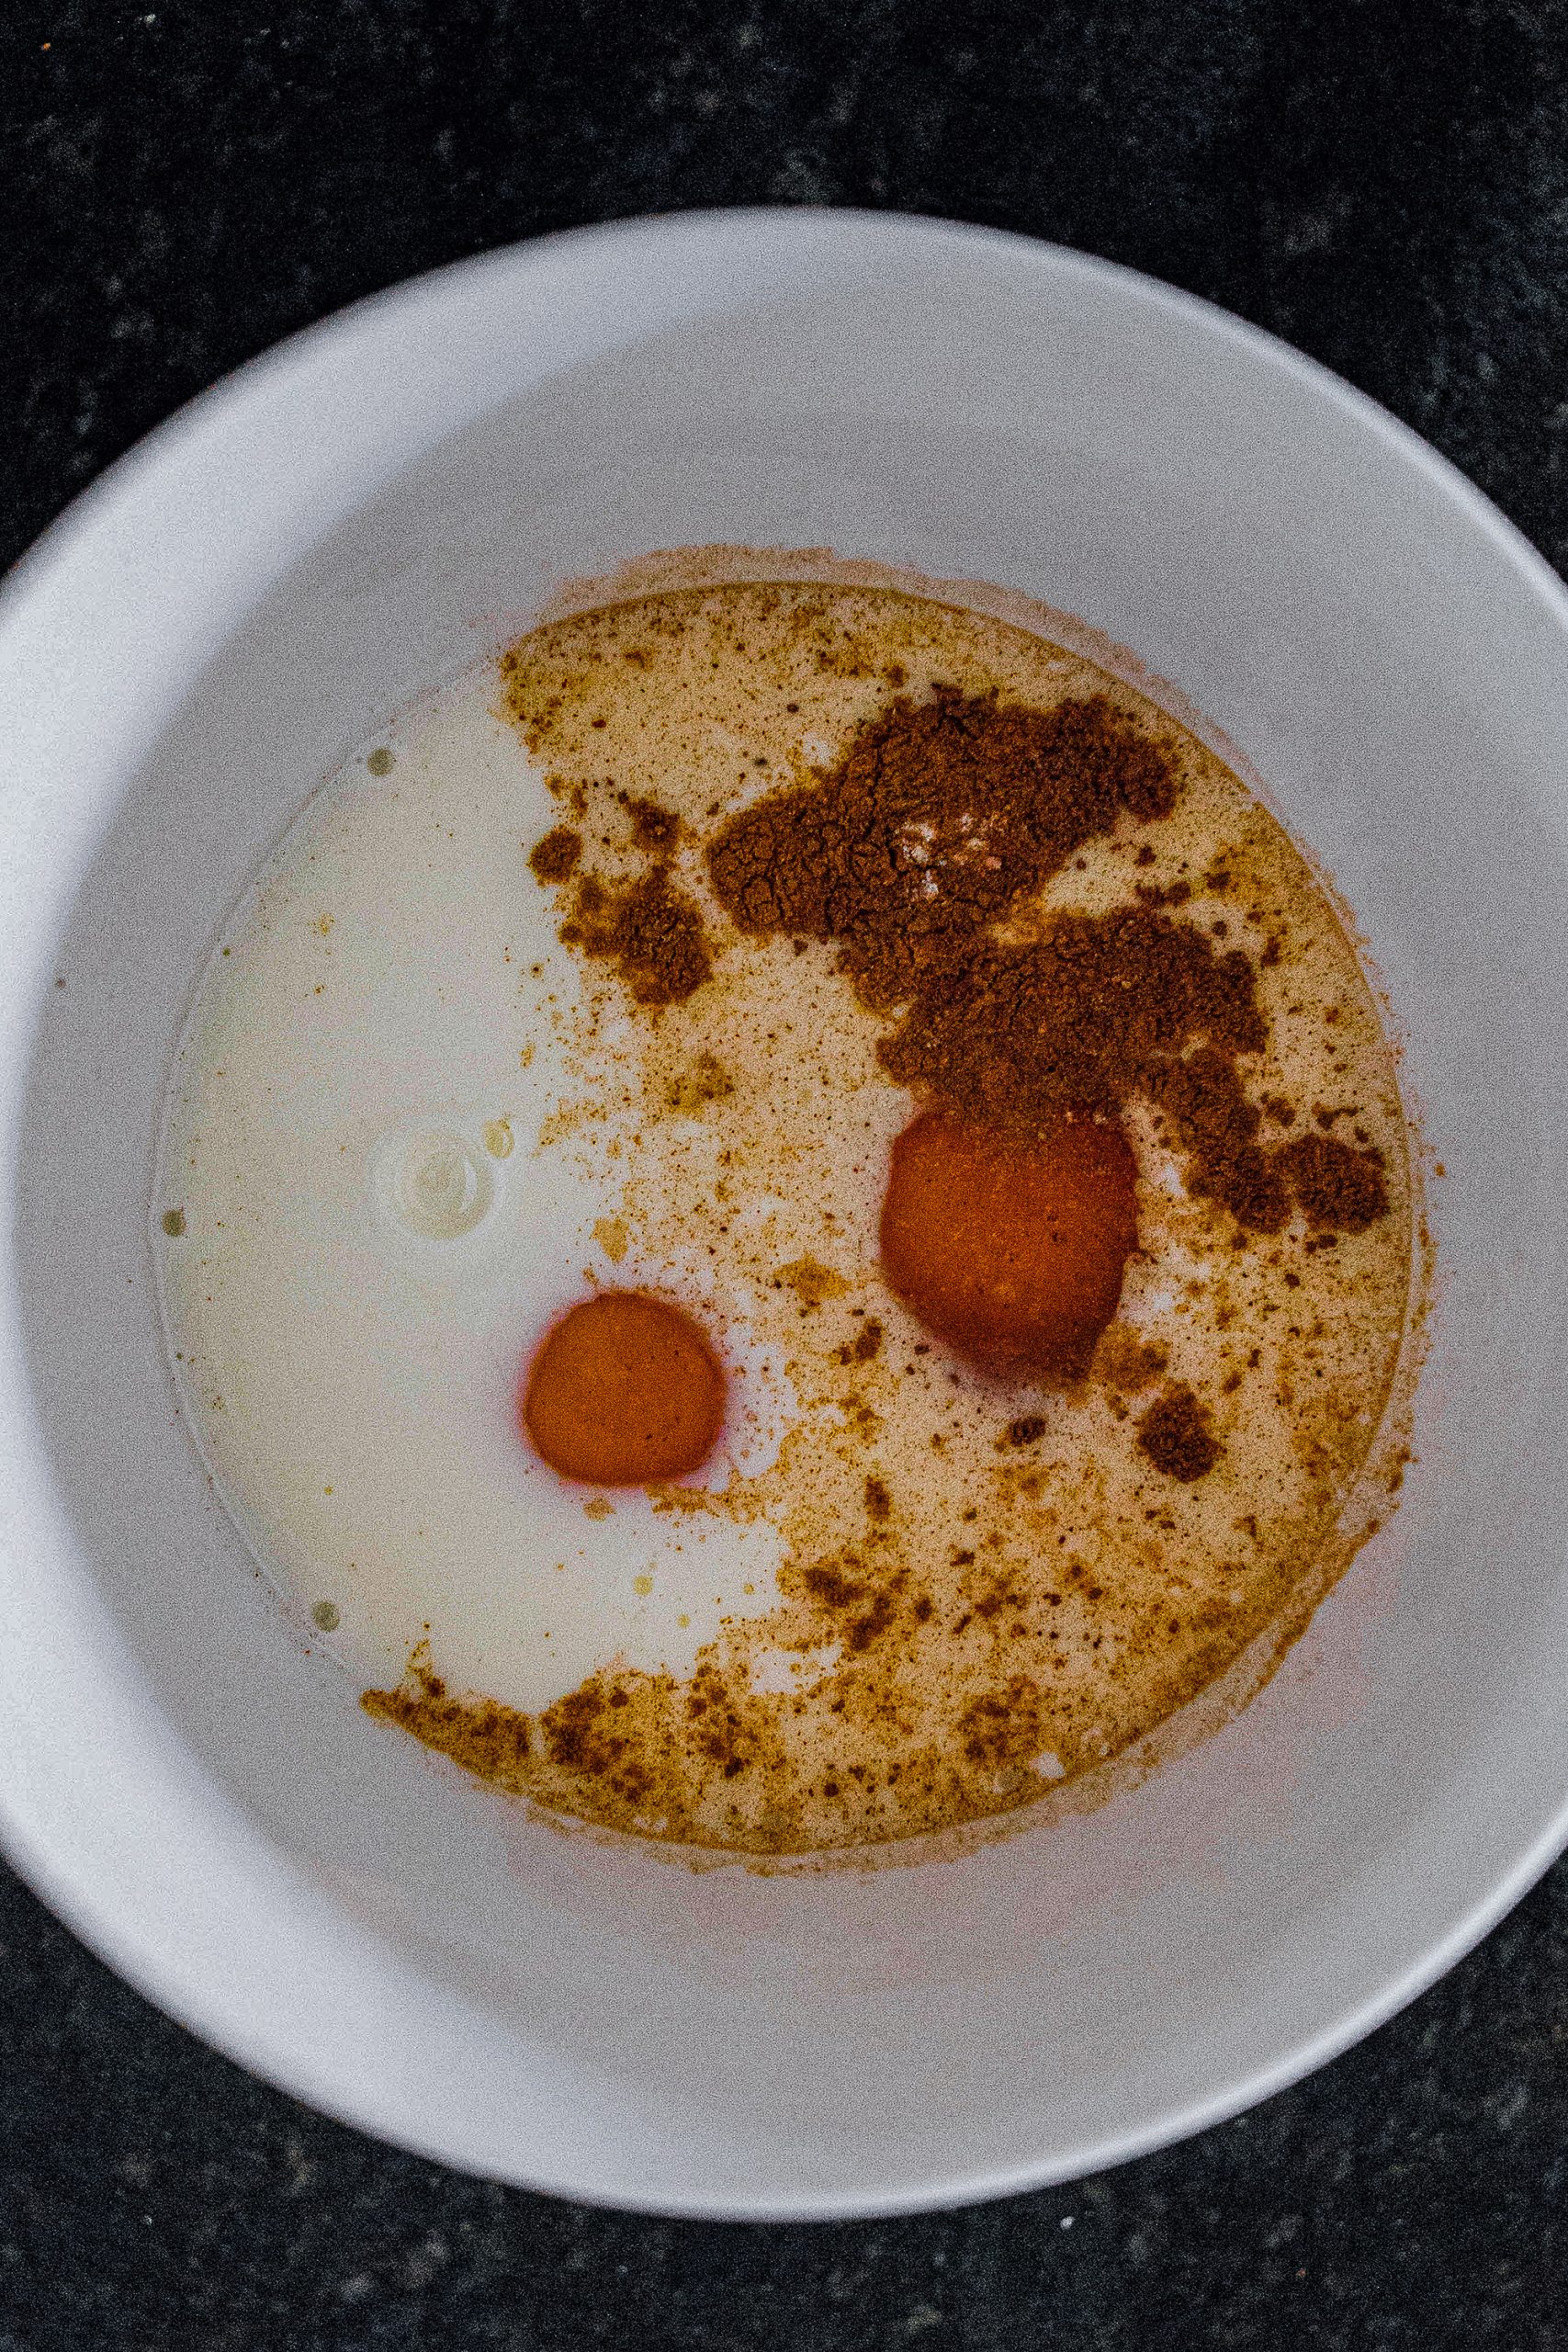 In a medium bowl, beat together eggs, milk, vanilla extract, ground cinnamon, nutmeg and salt.